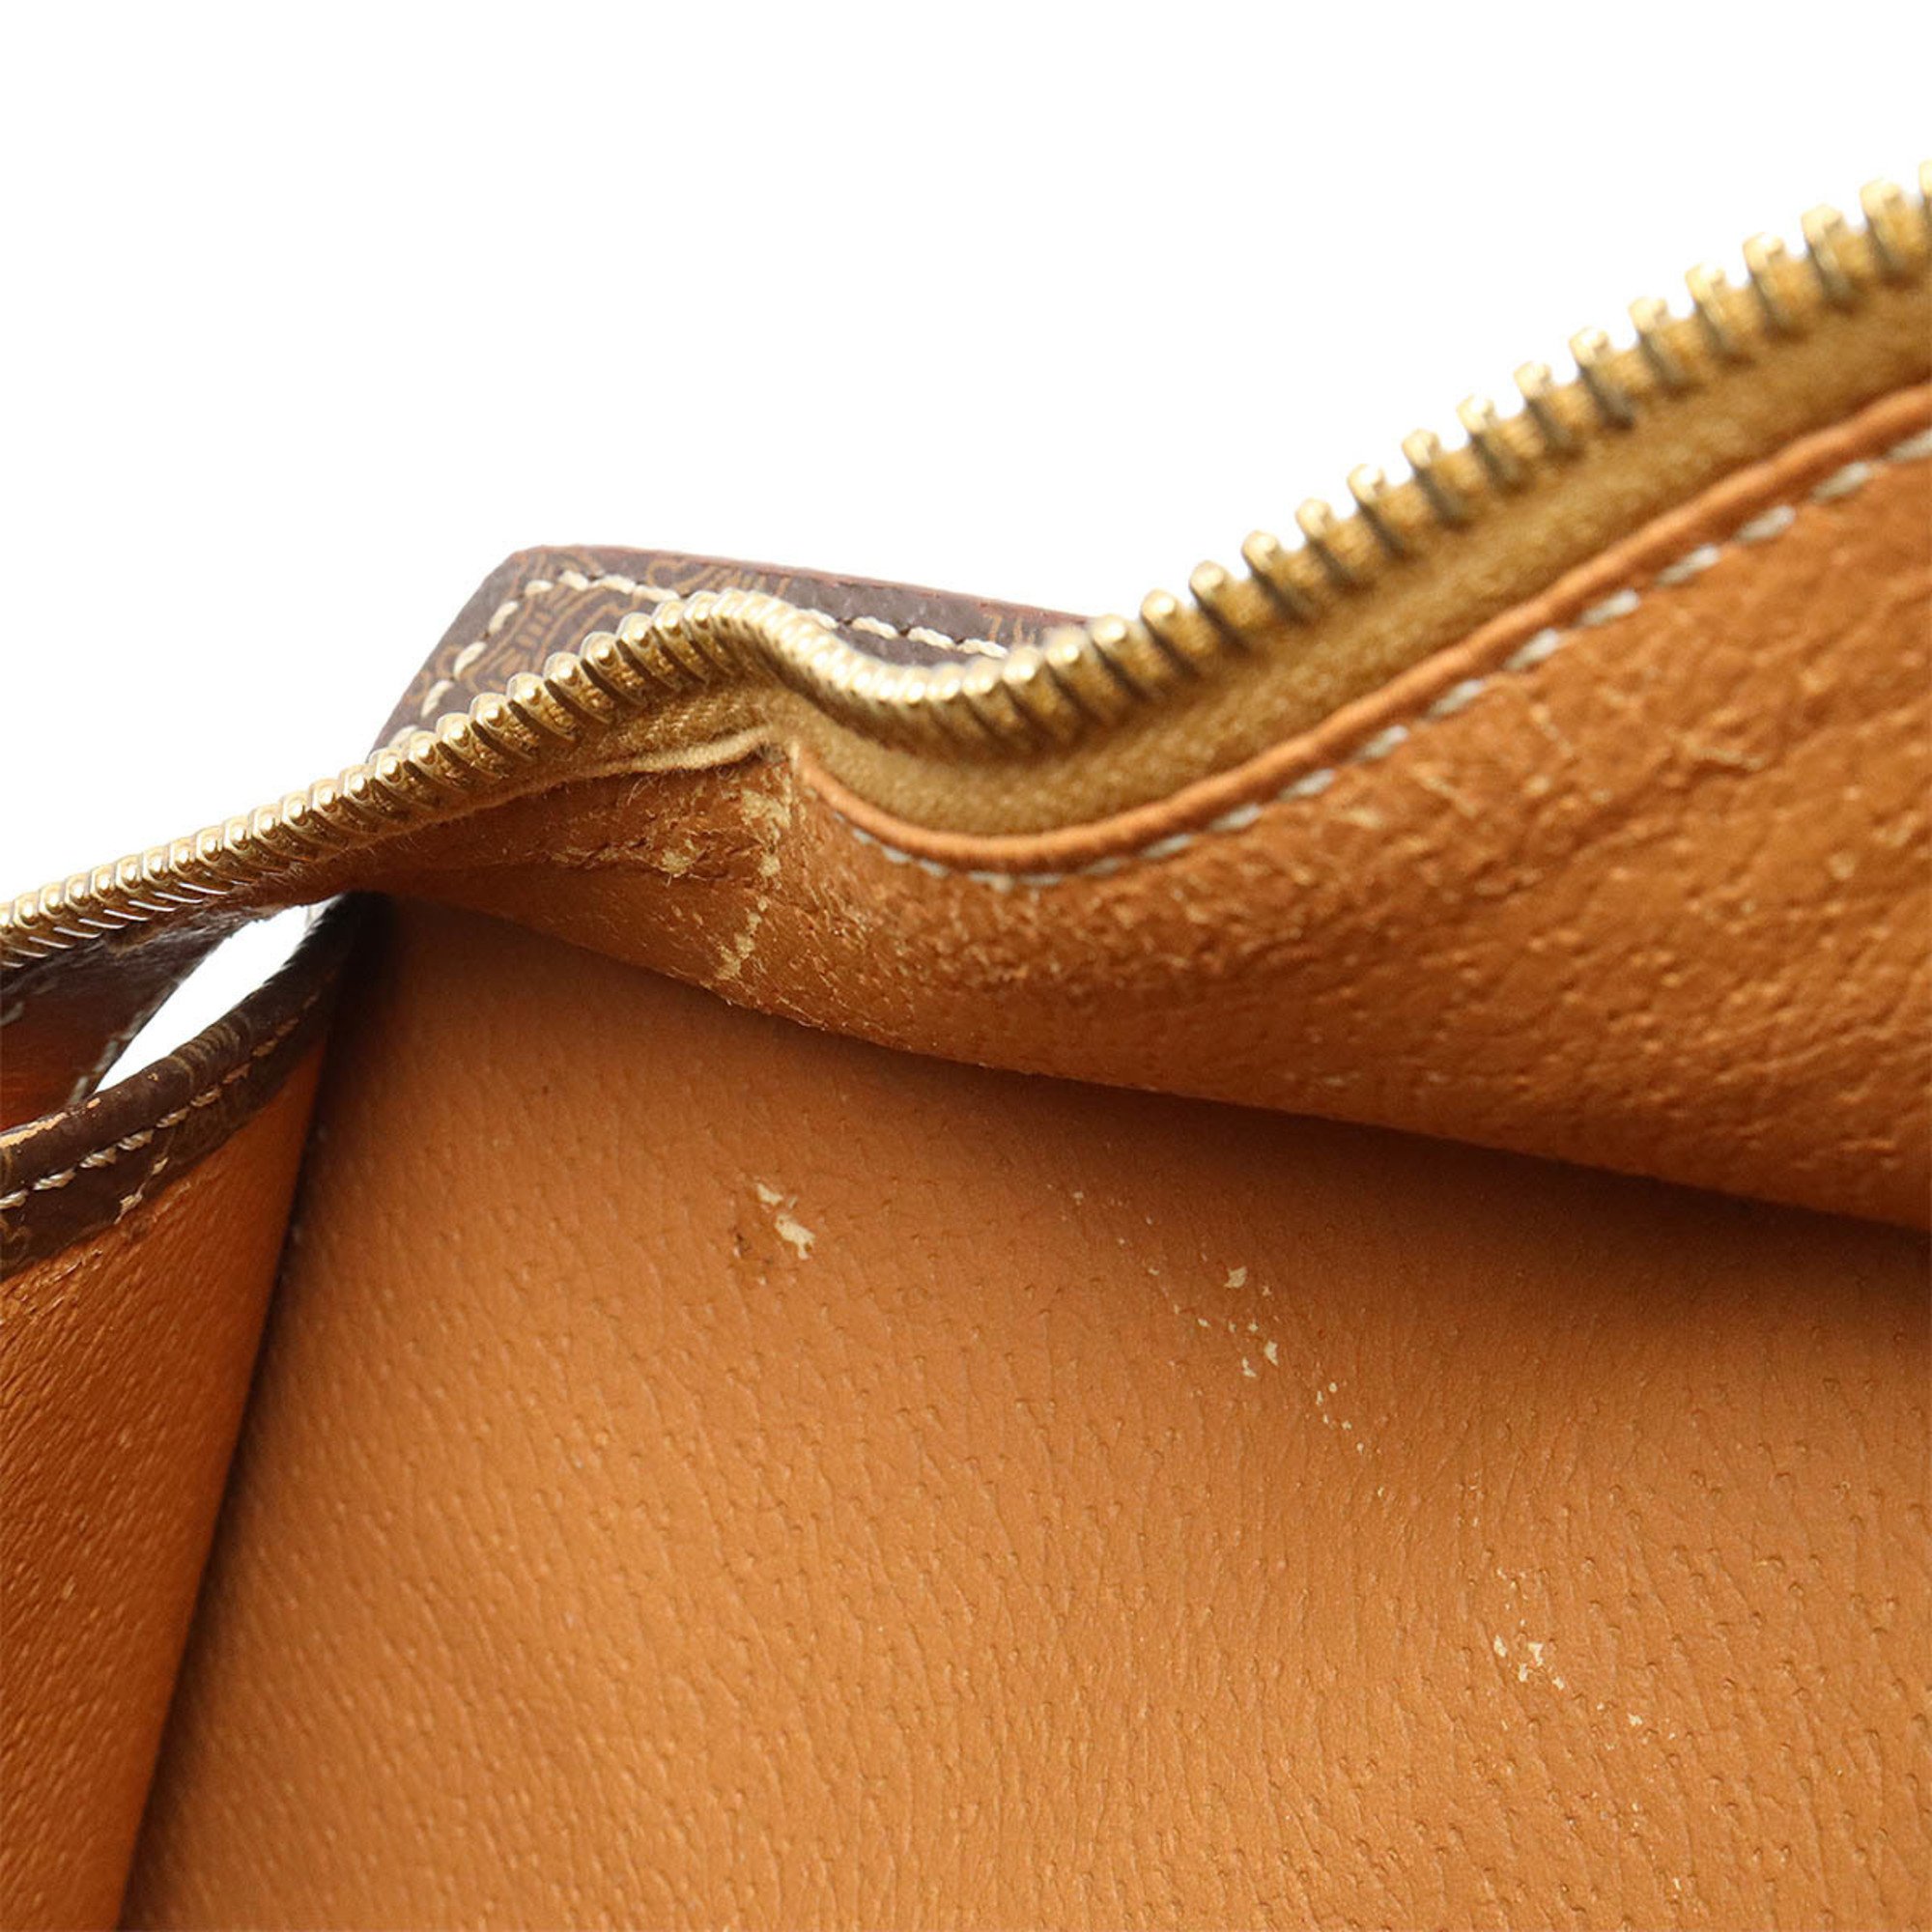 CELINE Macadam handbag in PVC and leather dark brown